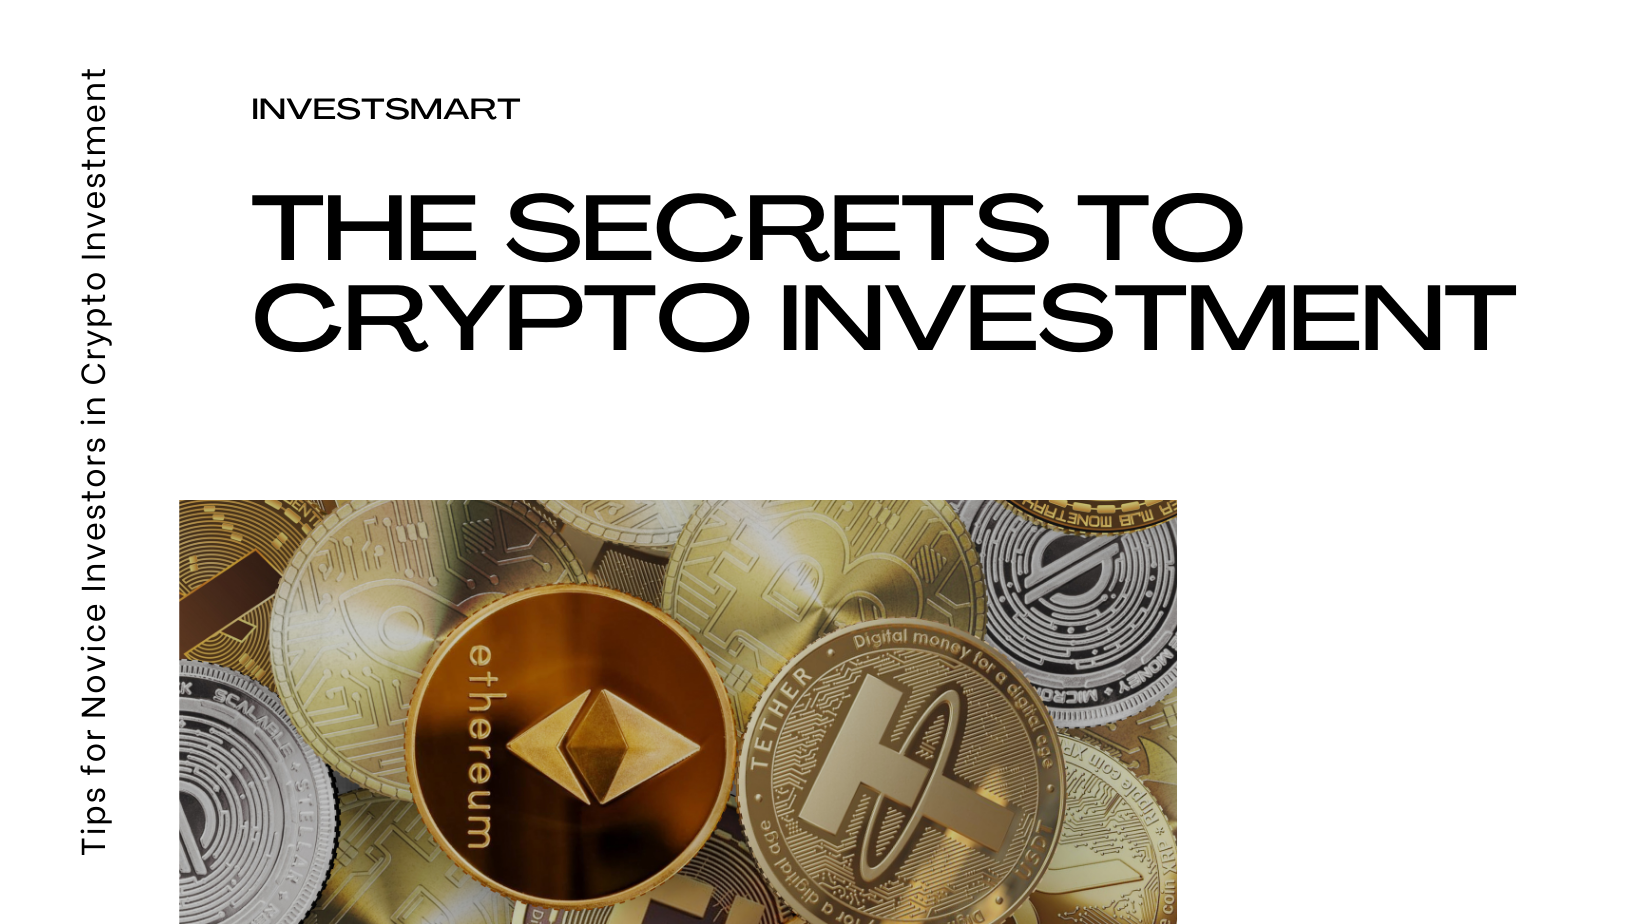 Crypto Investment